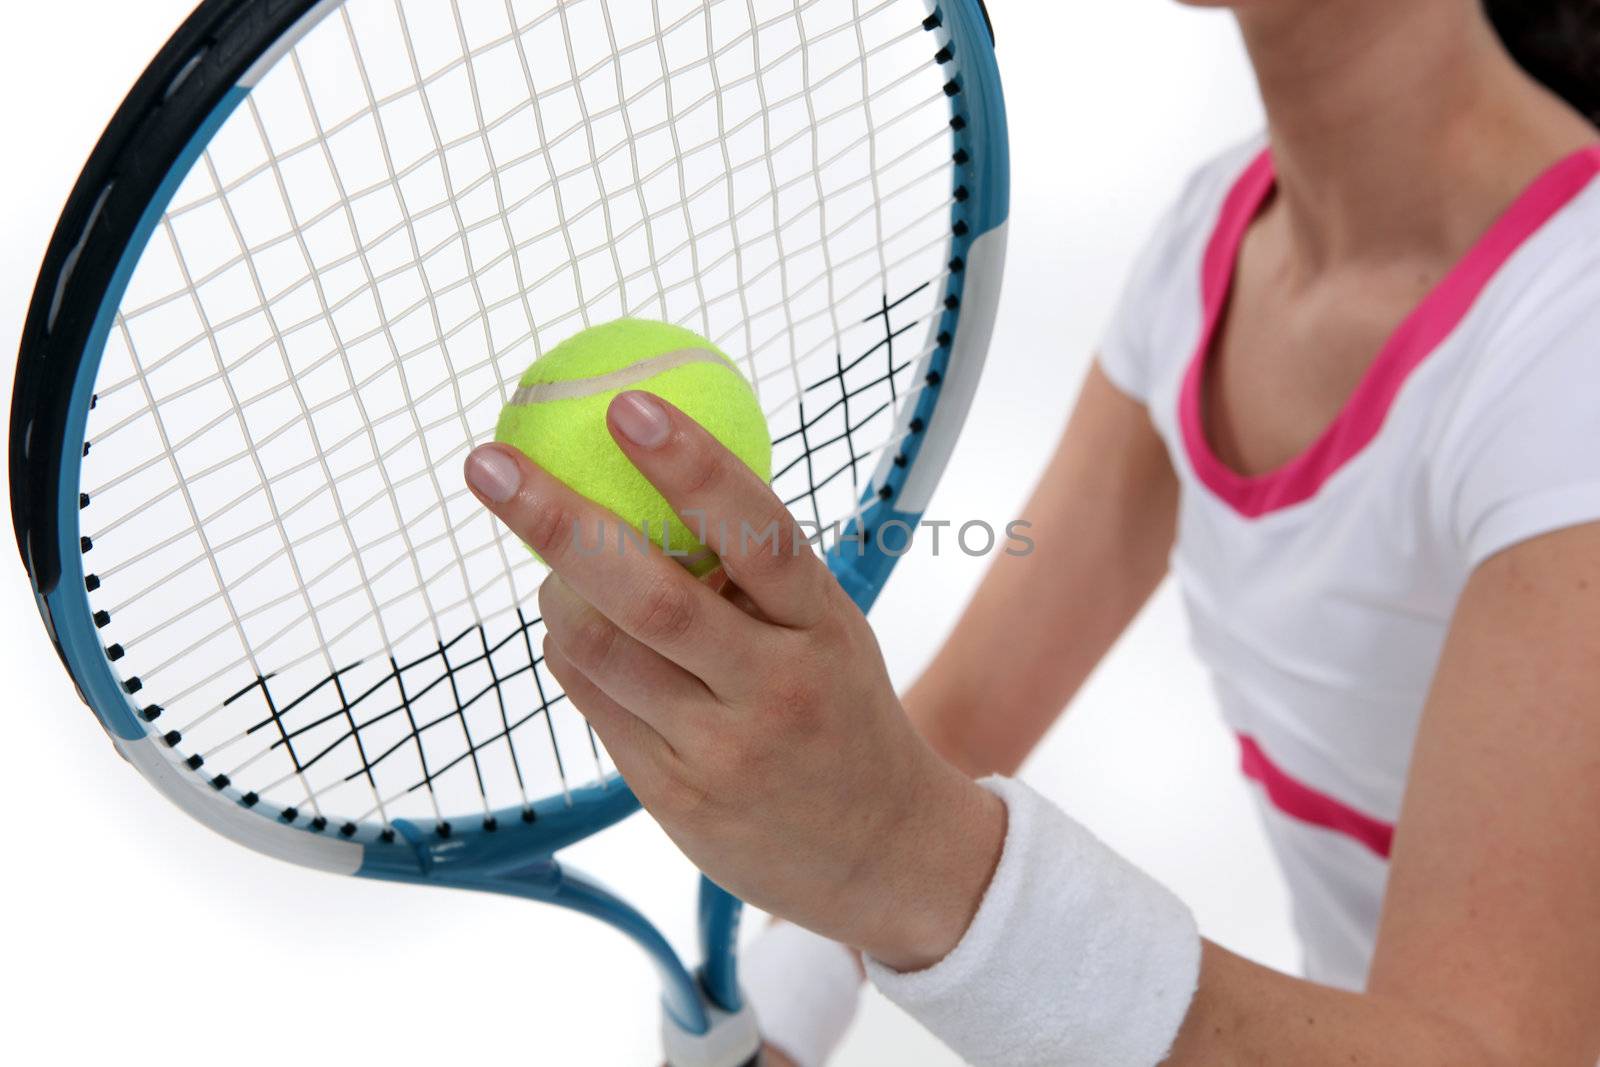 Tenniswoman. by phovoir